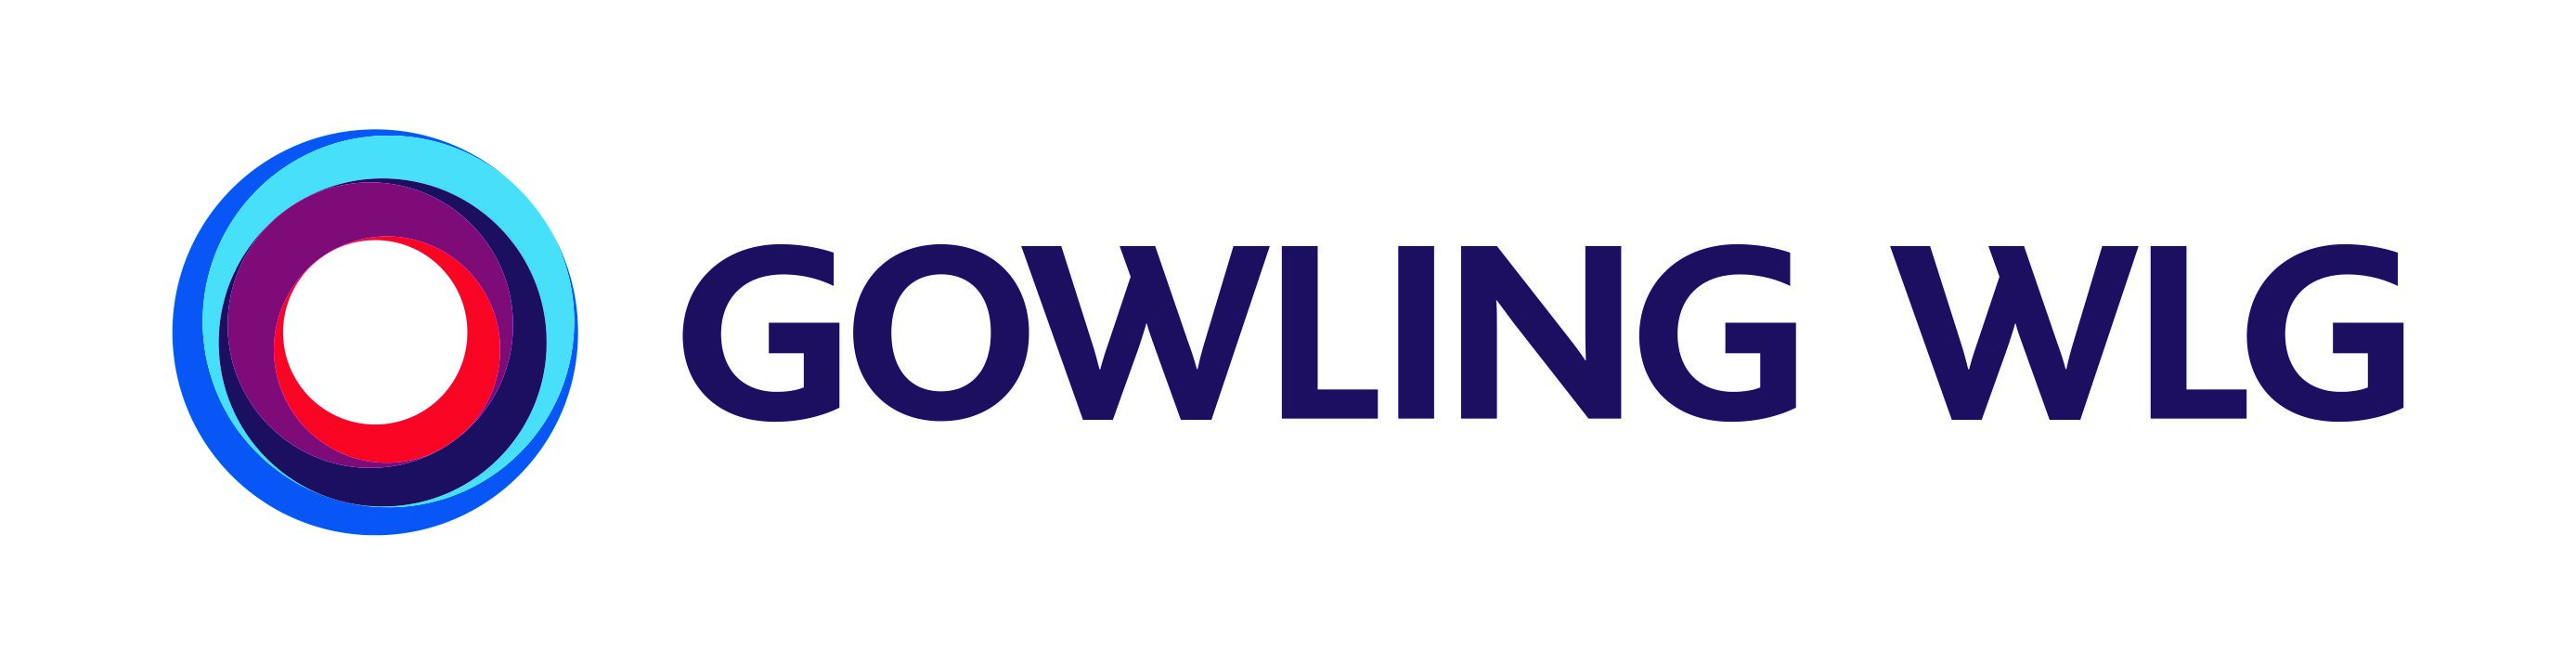 Gowling WLG LLP logo